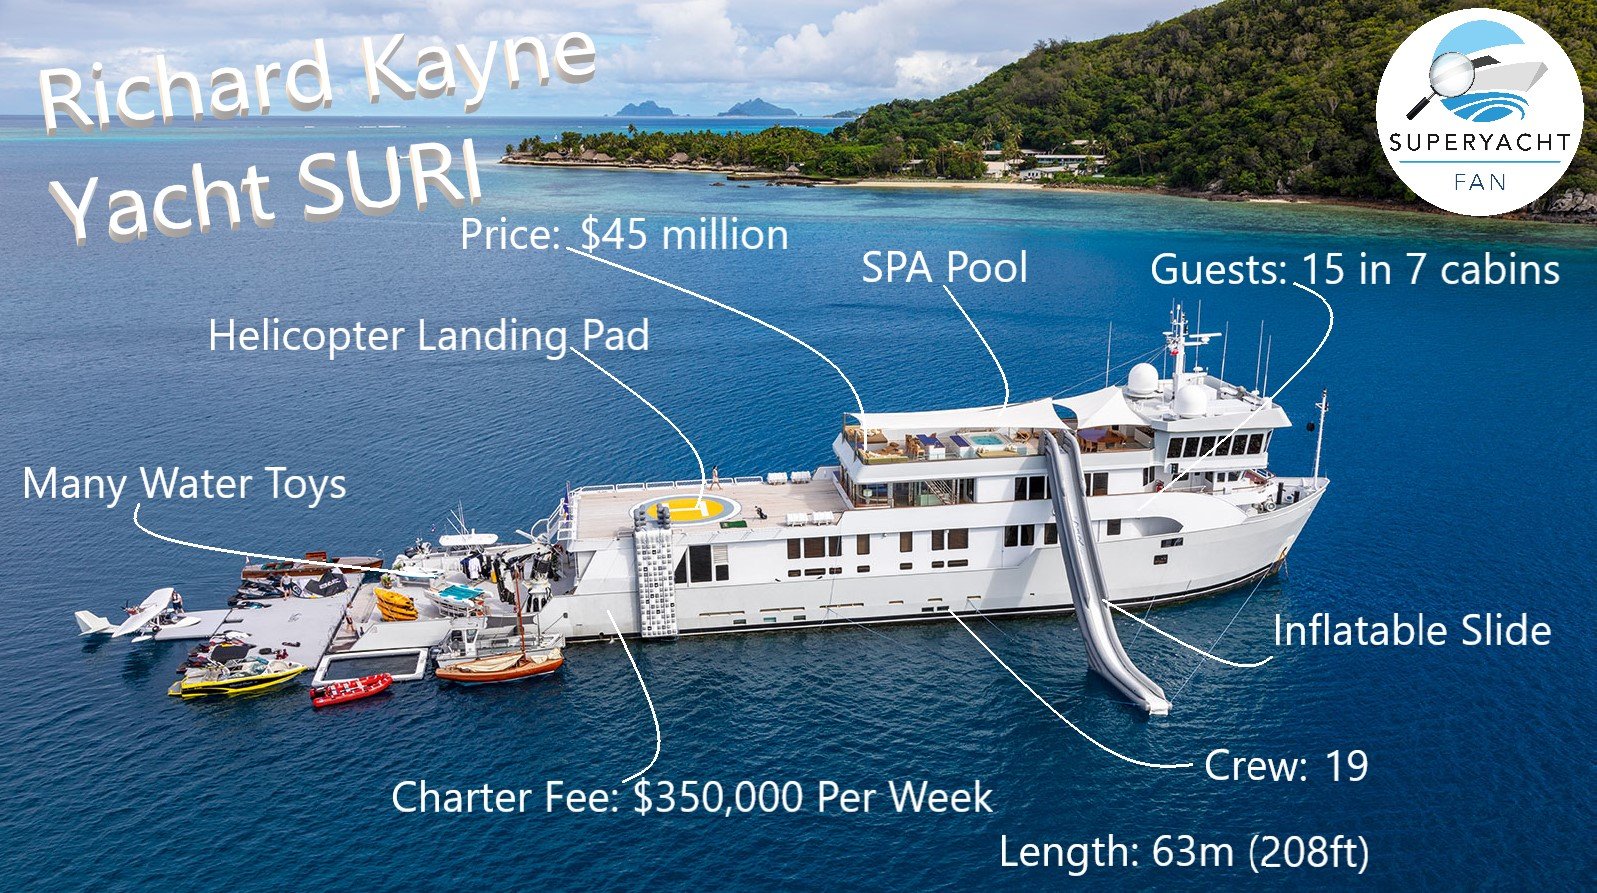 Richard Kayne Yacht SURI